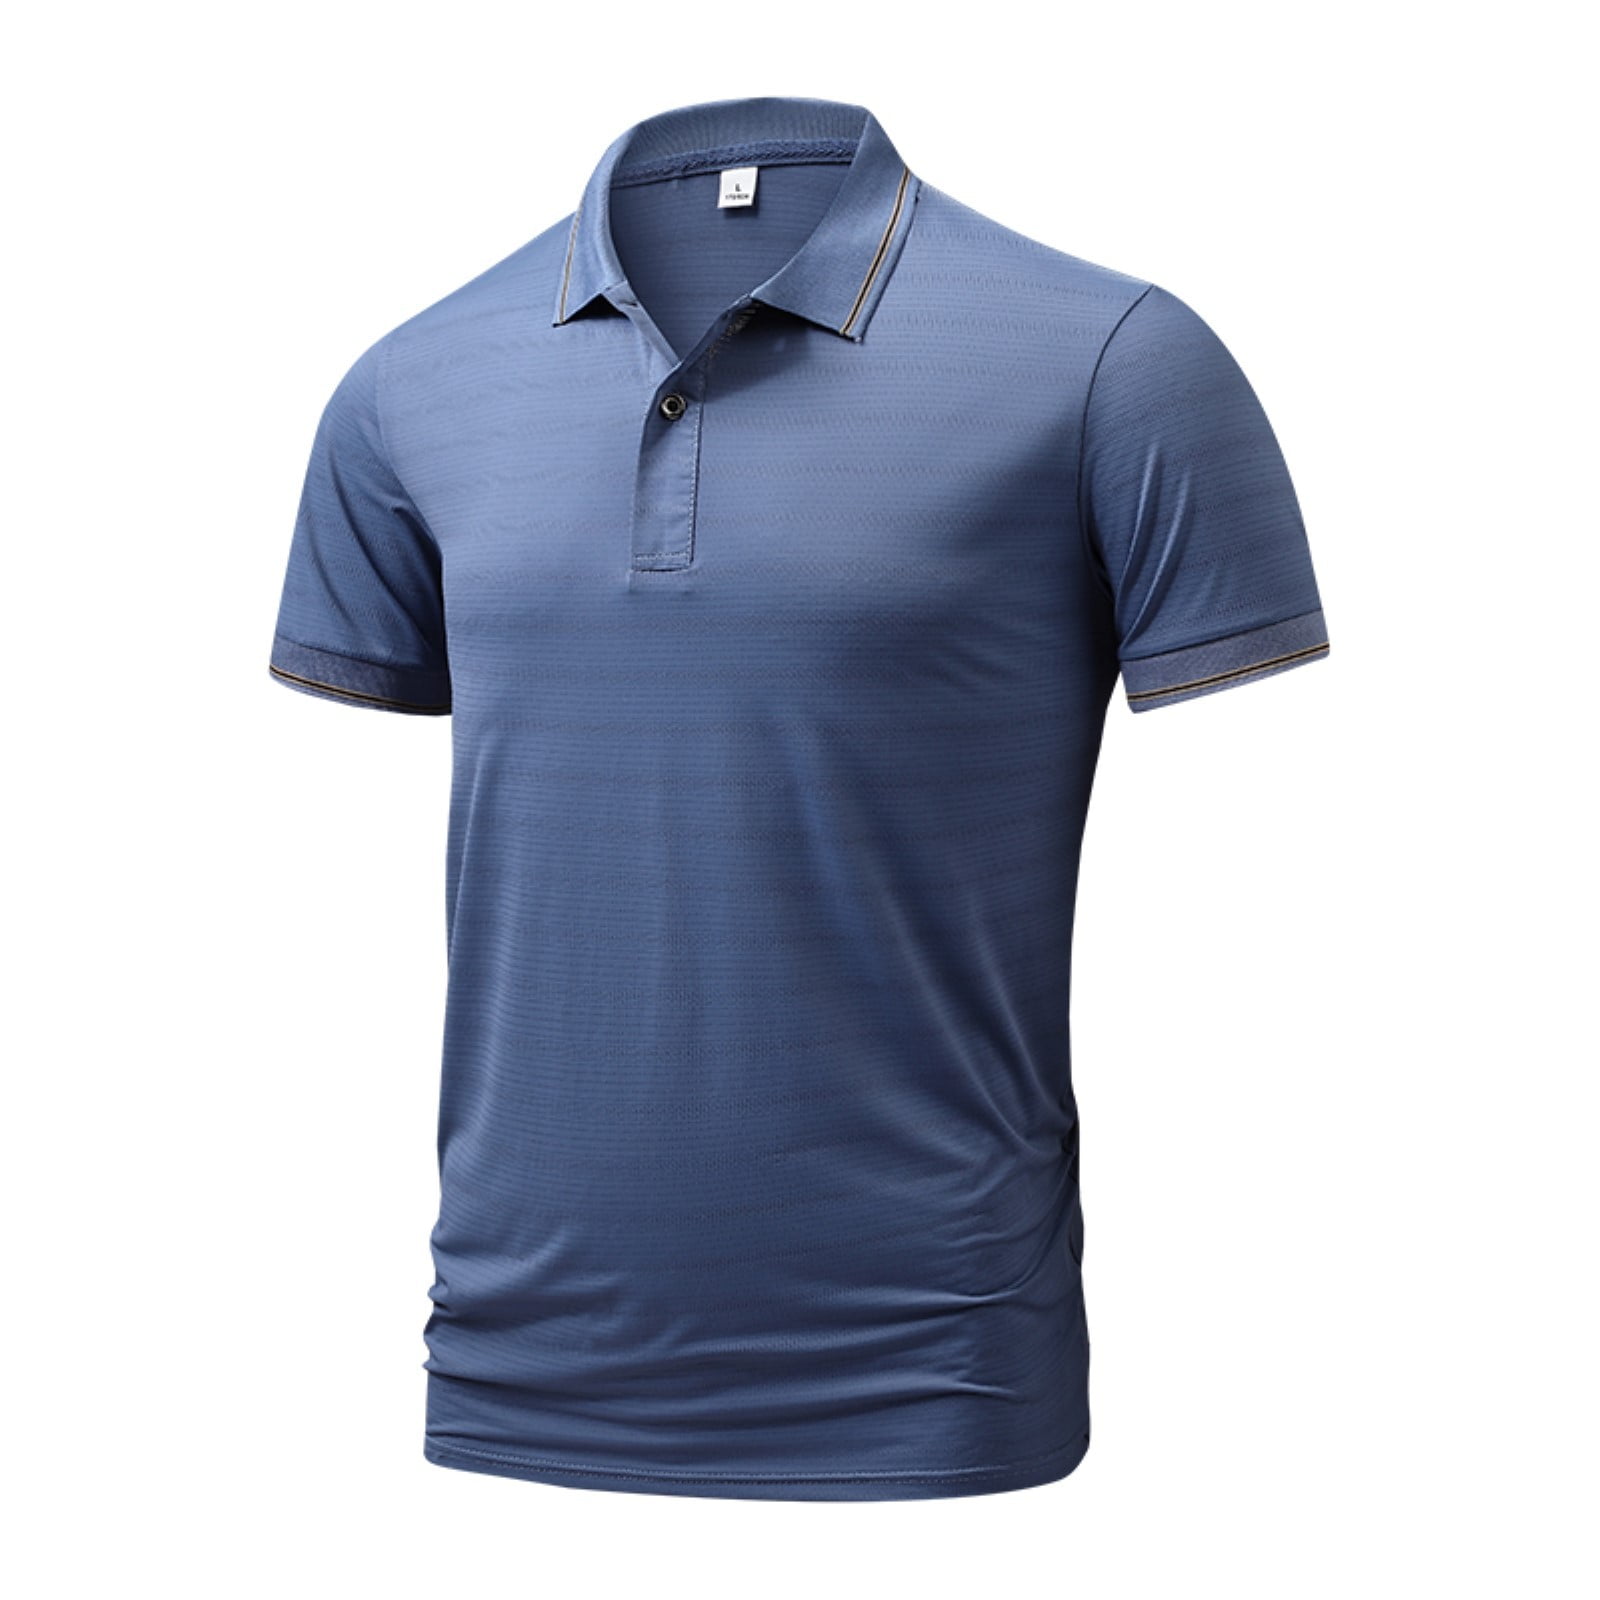 Blend EcoSmart adviicd Shirts, Blue Pocket L Tops Men Cotton Polo Shirt Shirts Fashion Polo Men\'s Sports with Men\'s